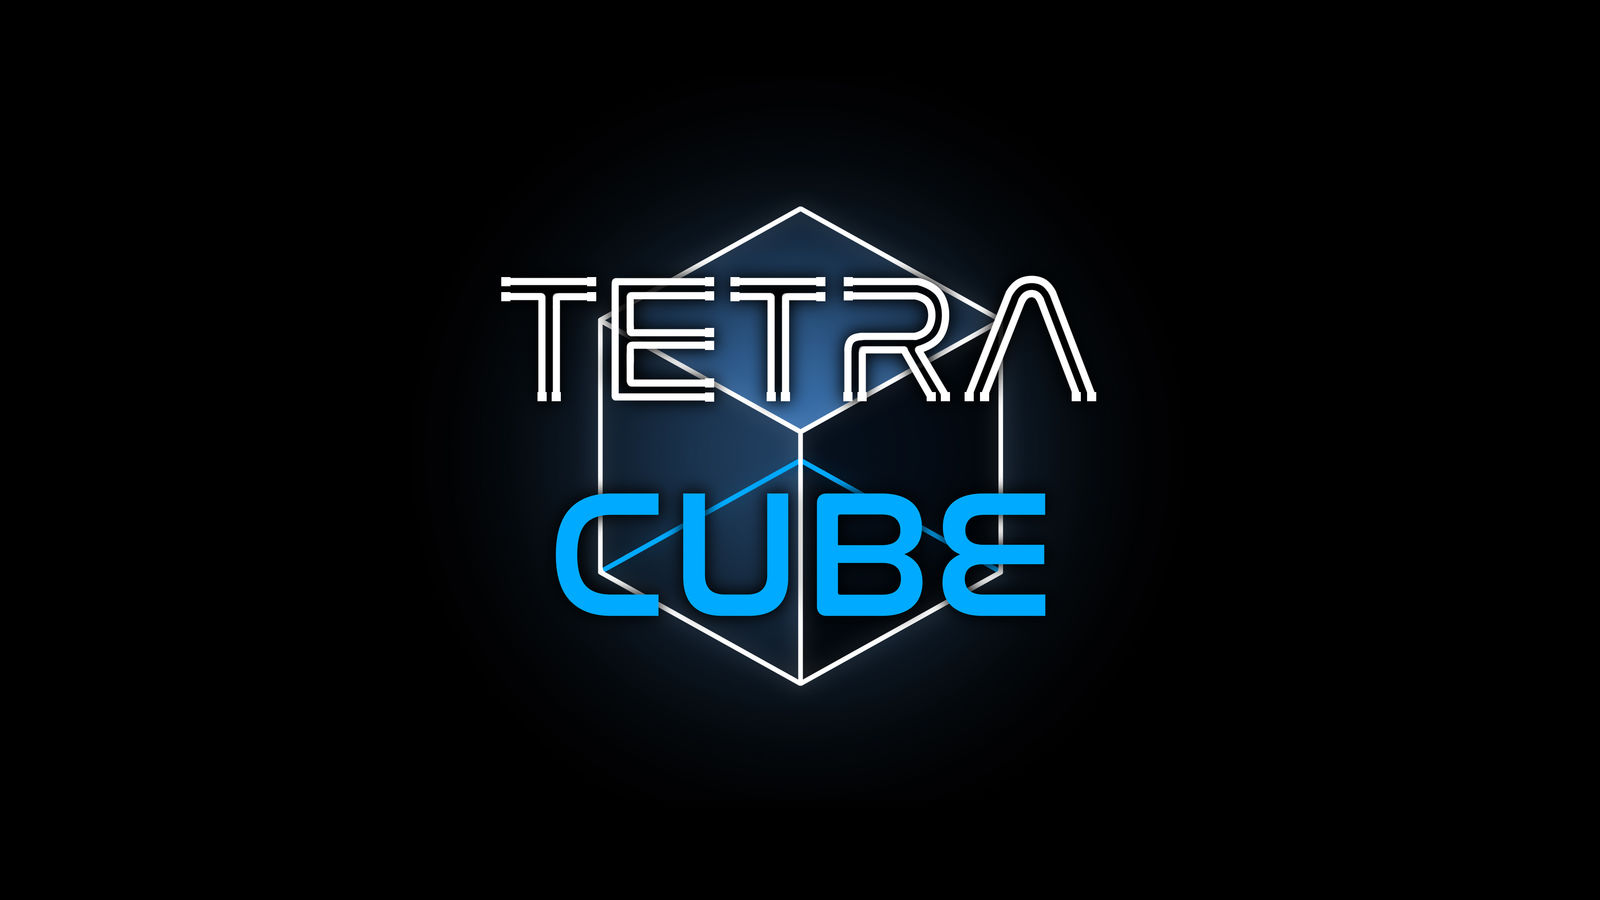 Tetra Cube发售了。插画图片壁纸